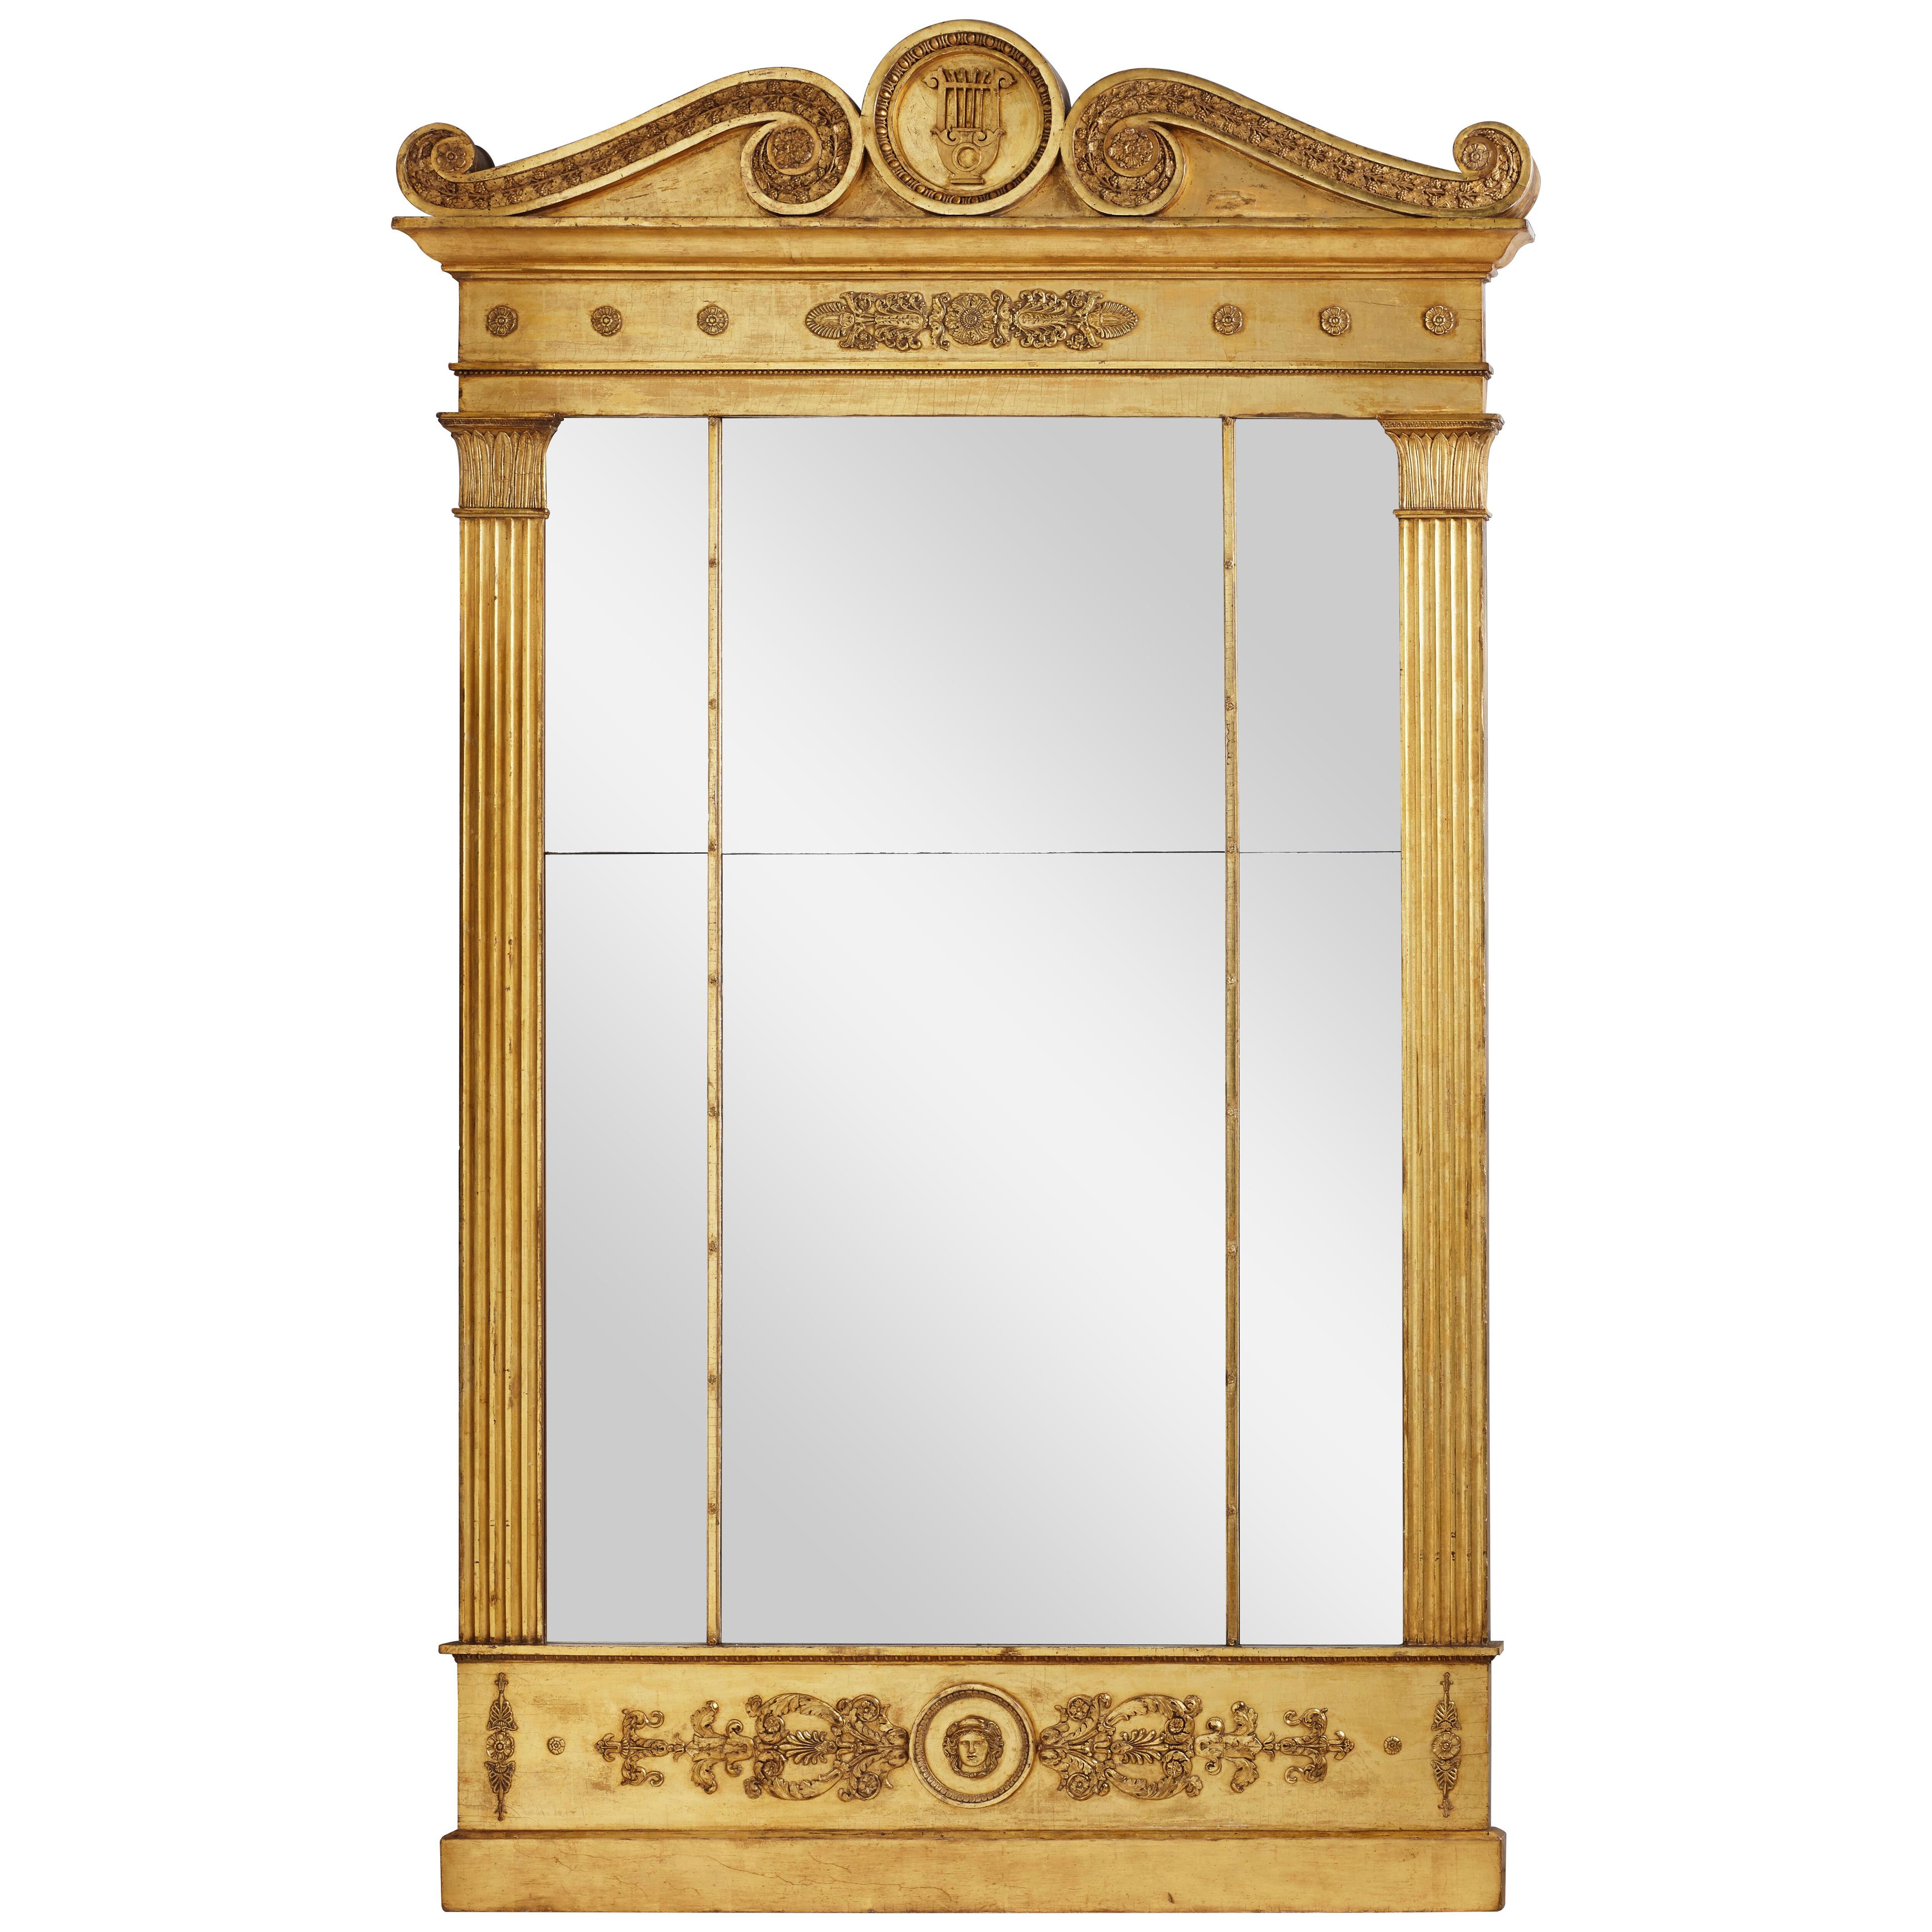 Impressive Royal Early 19th Century German Empire Mirror